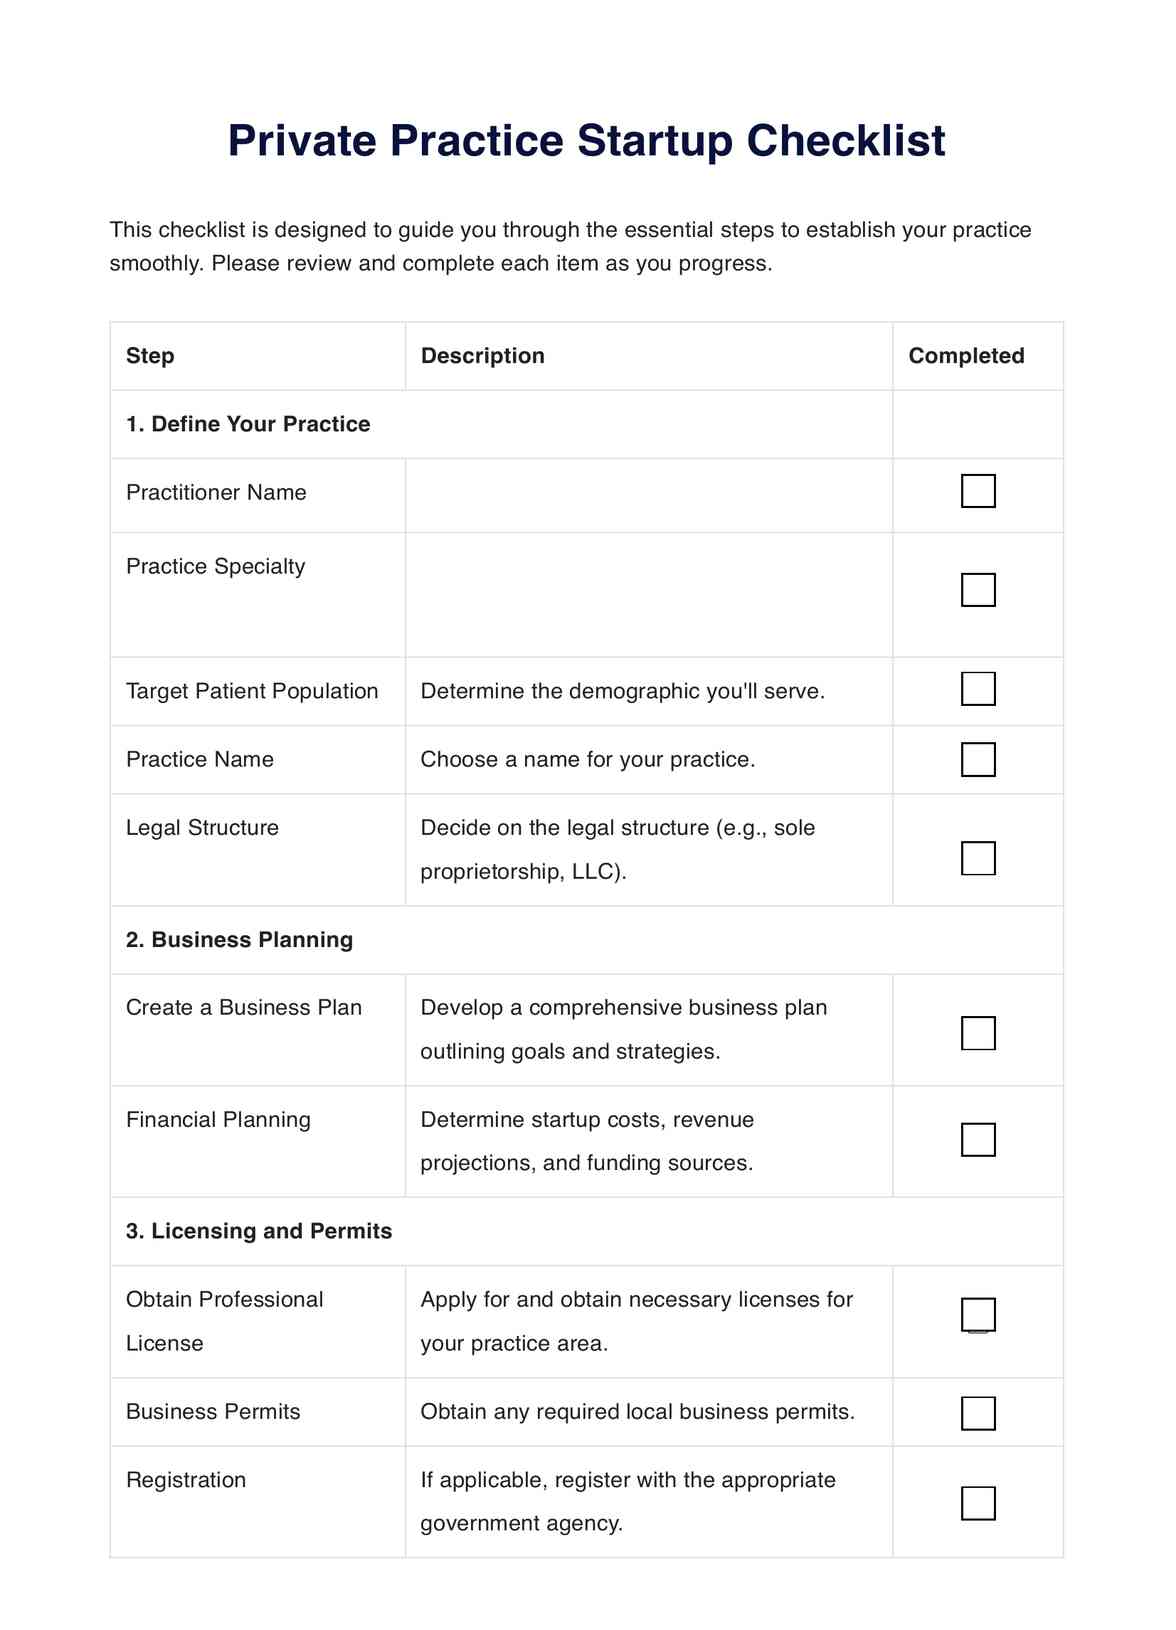 Private Practice Startup Checklist PDF Example